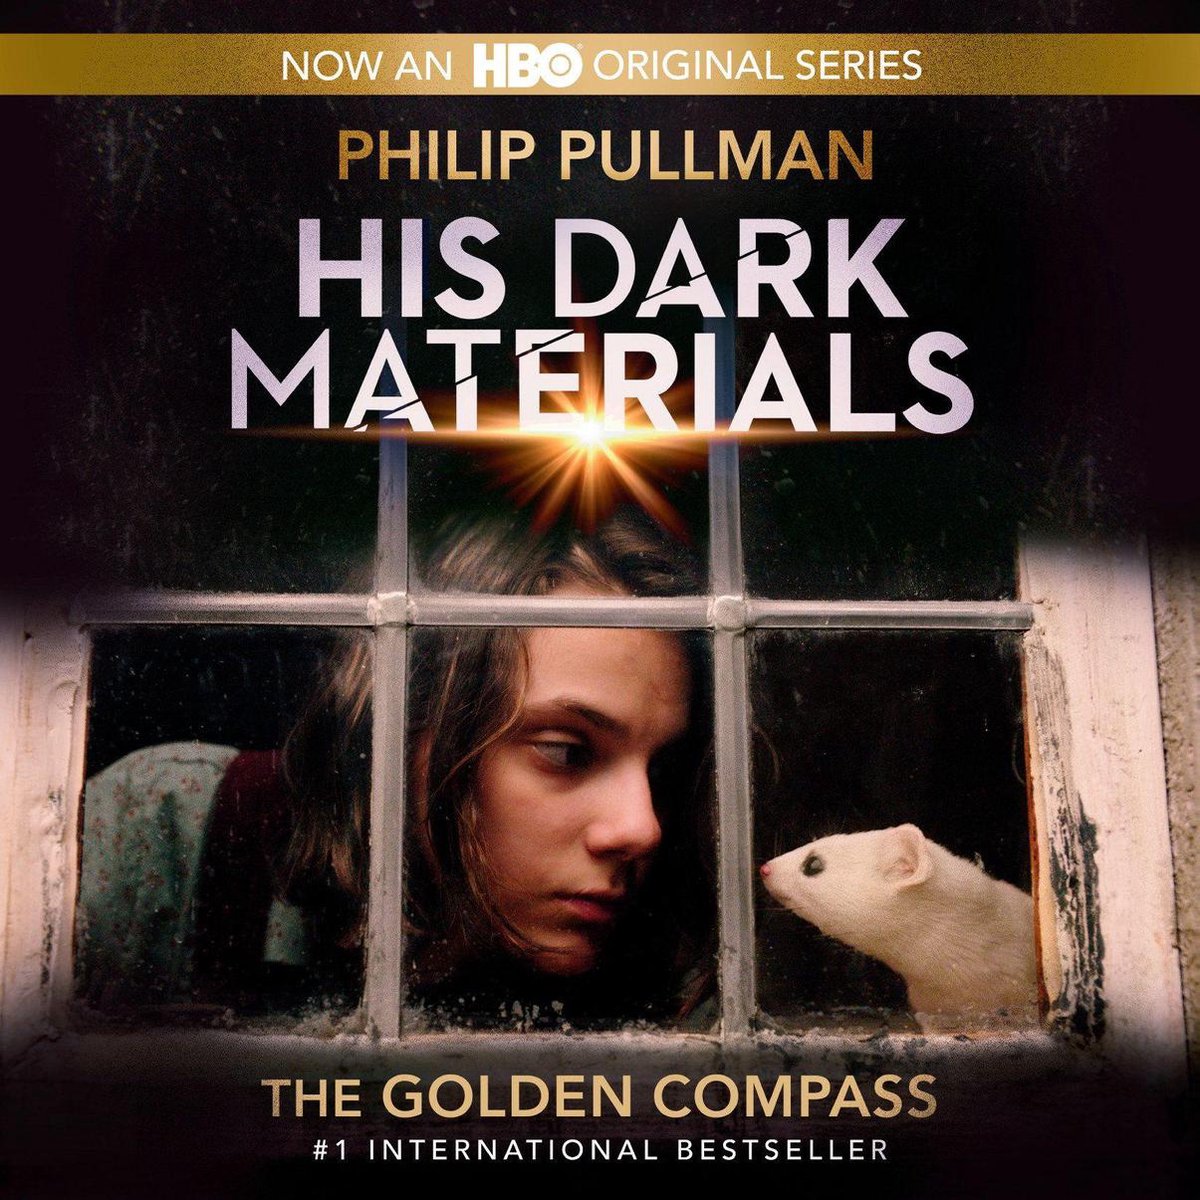 His Dark Materials: The Golden Compass (Book 1) - Philip Pullman